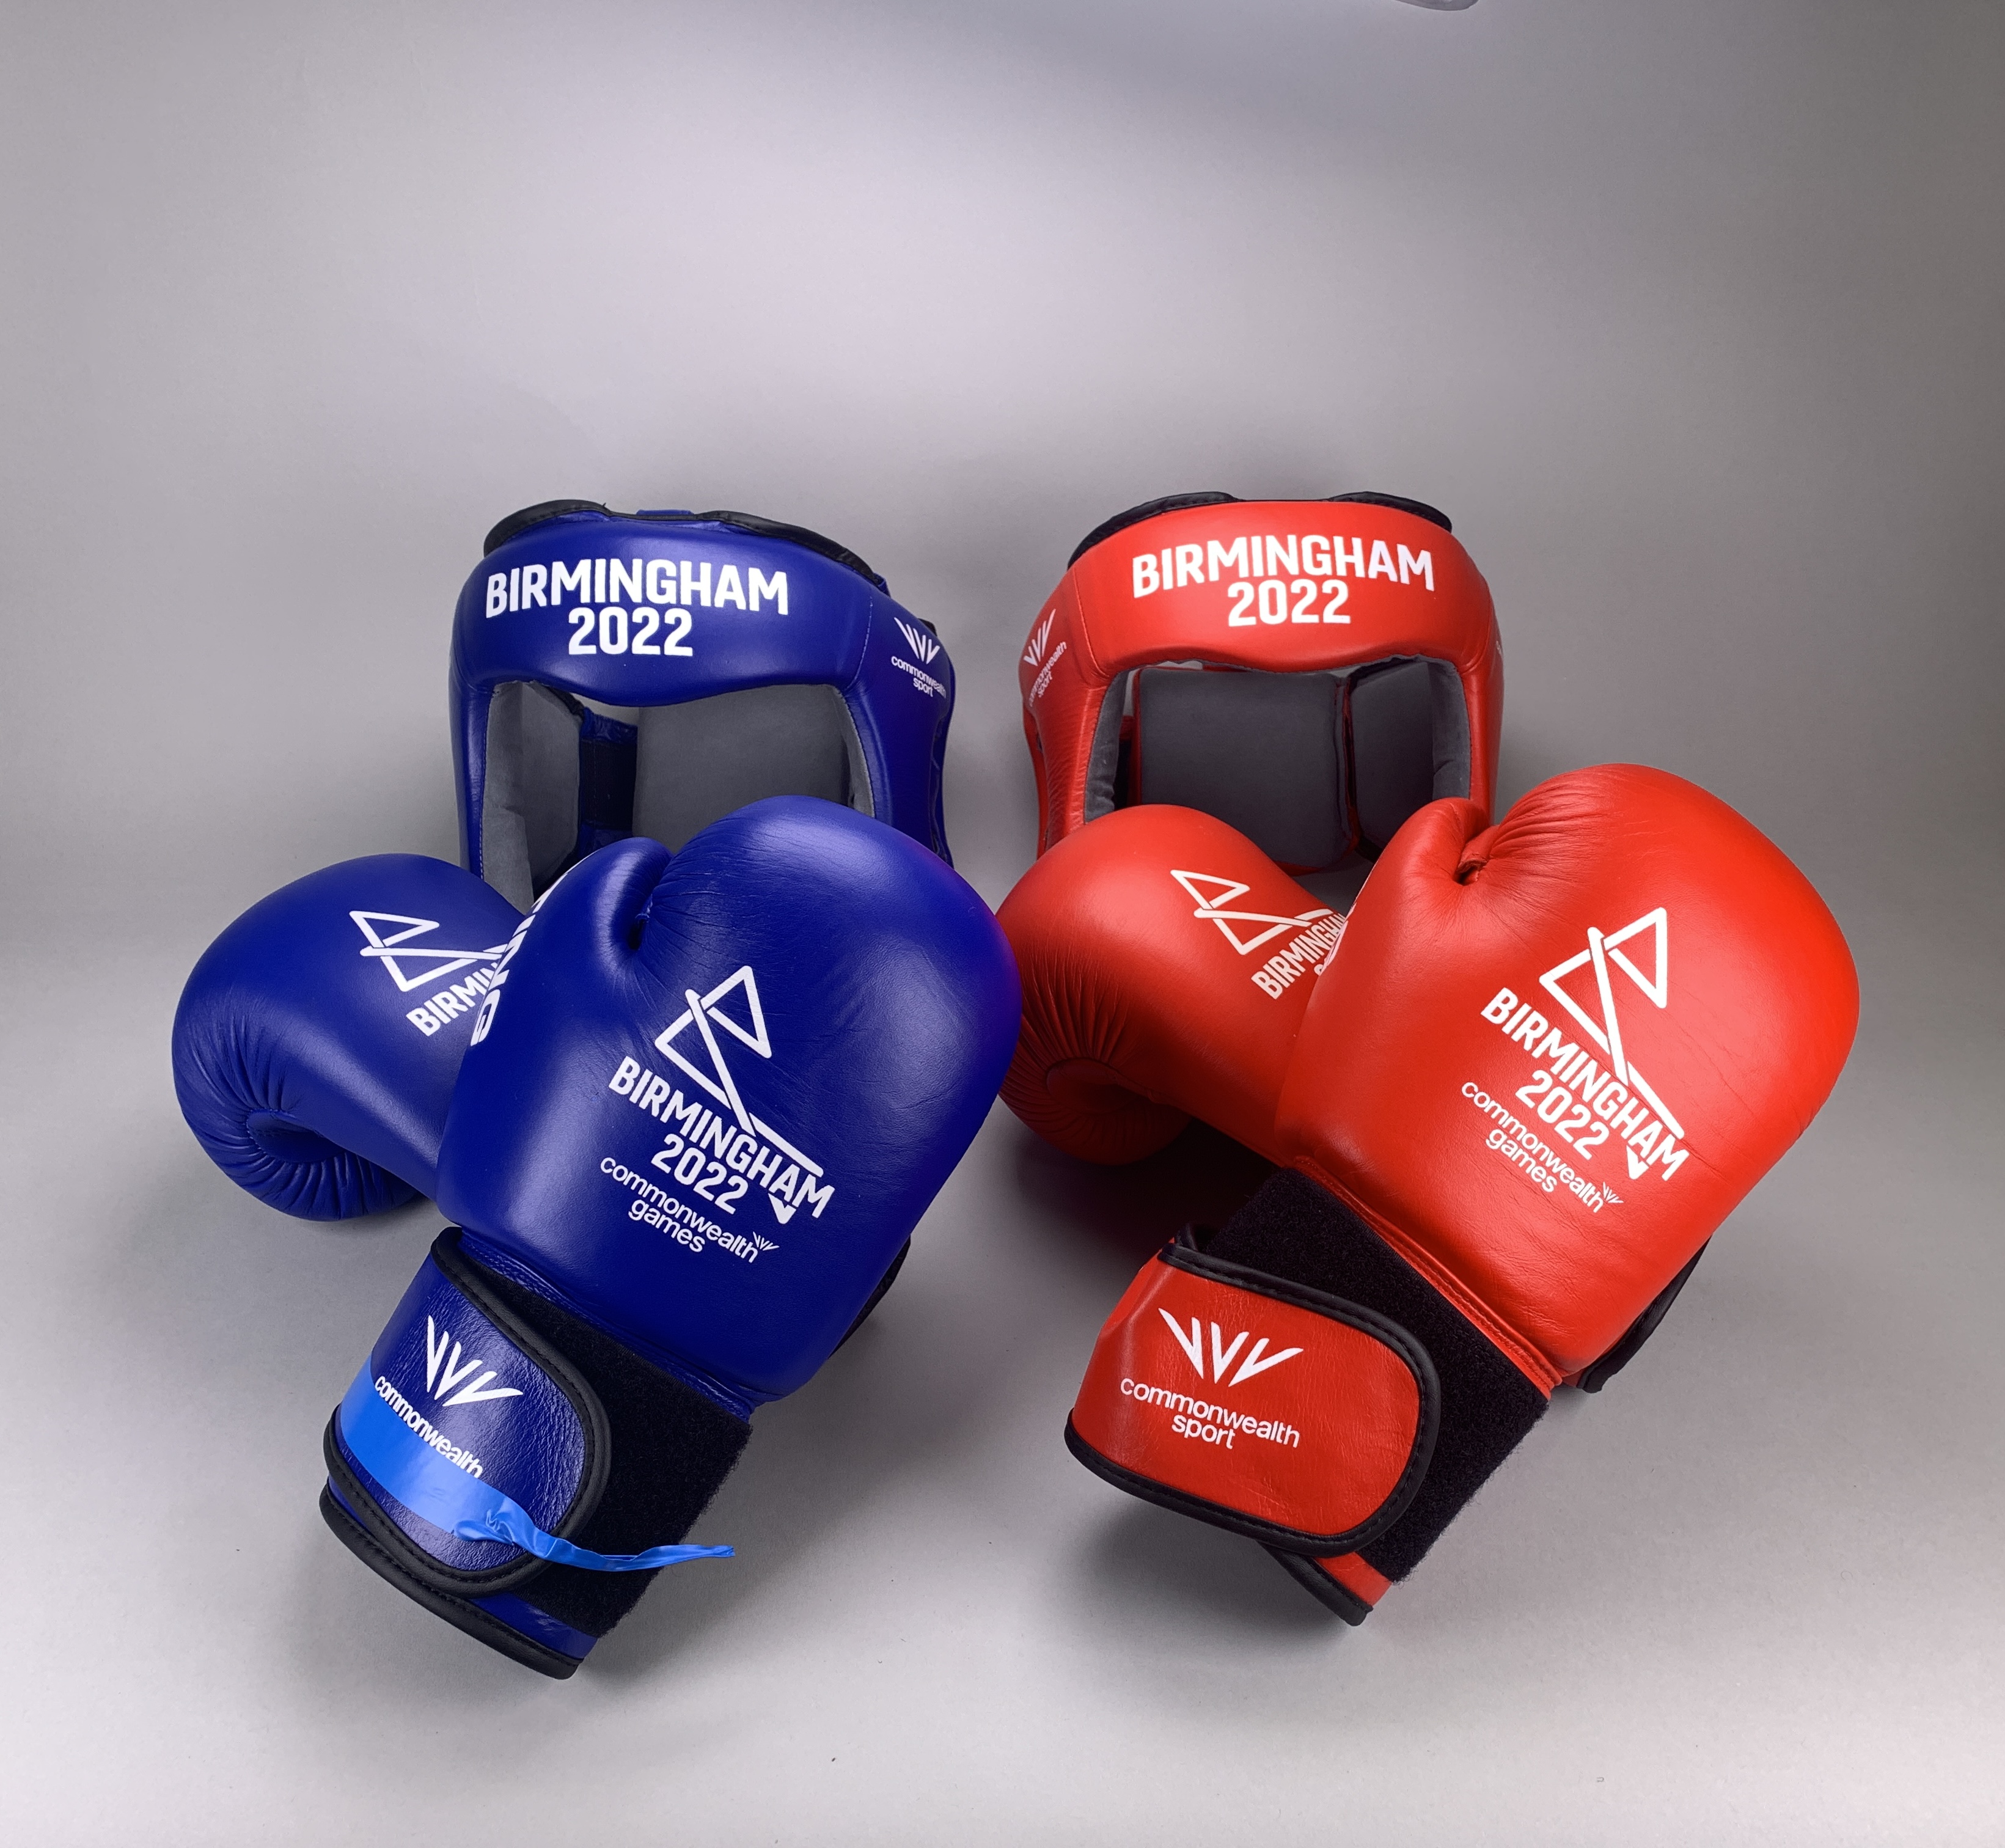 B2022 Women's Light Middleweight Quarter-Final Boxing Gloves and Headguard - Borgohain vs Eccles